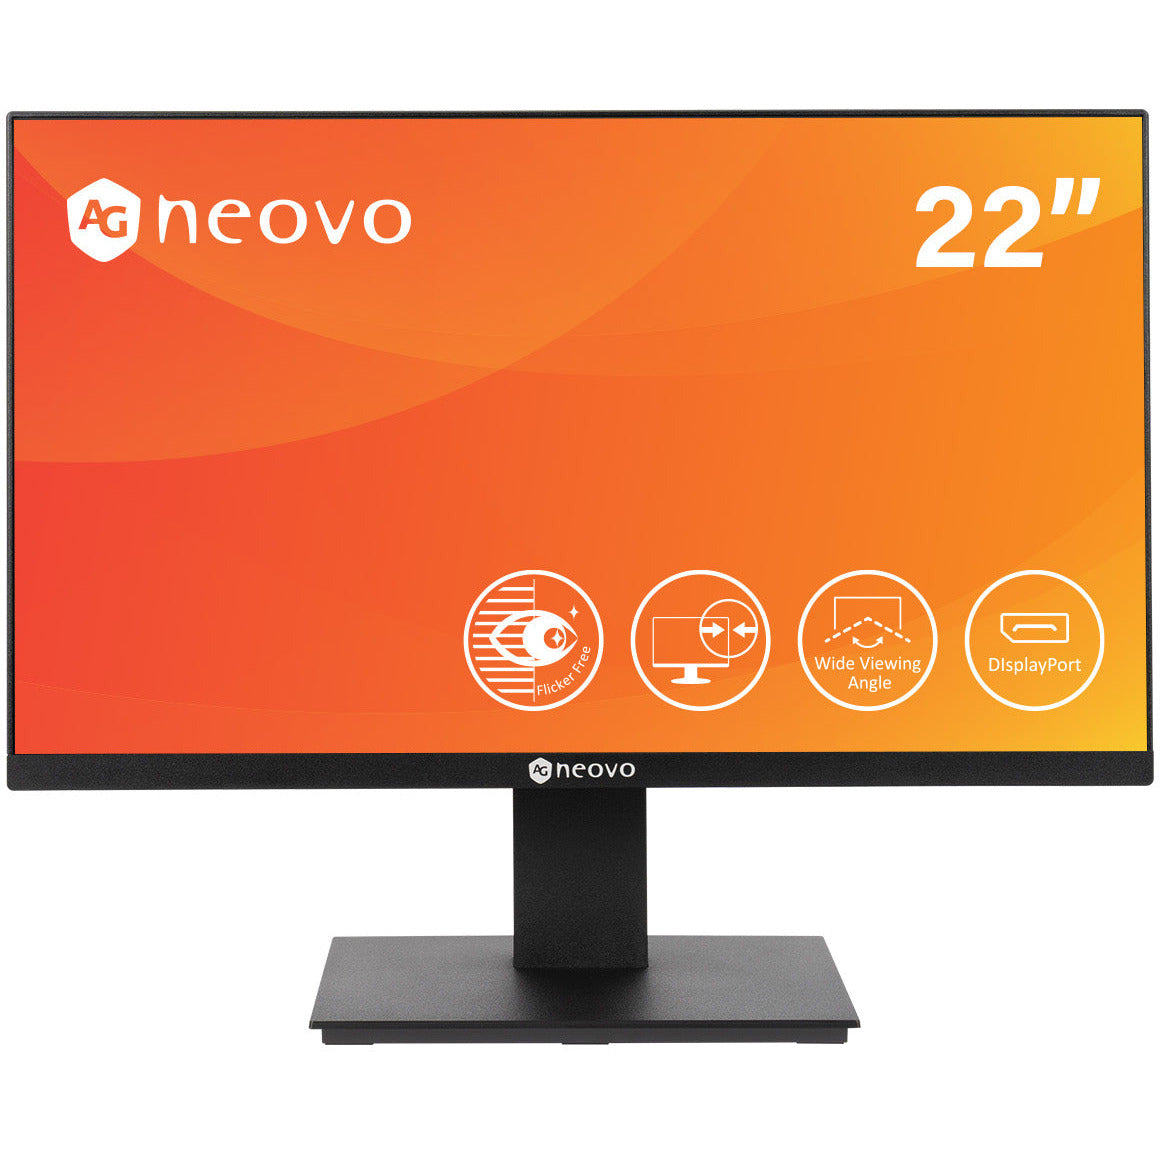 AG Neovo LA-2202  22-Inch Full HD LCD Monitor